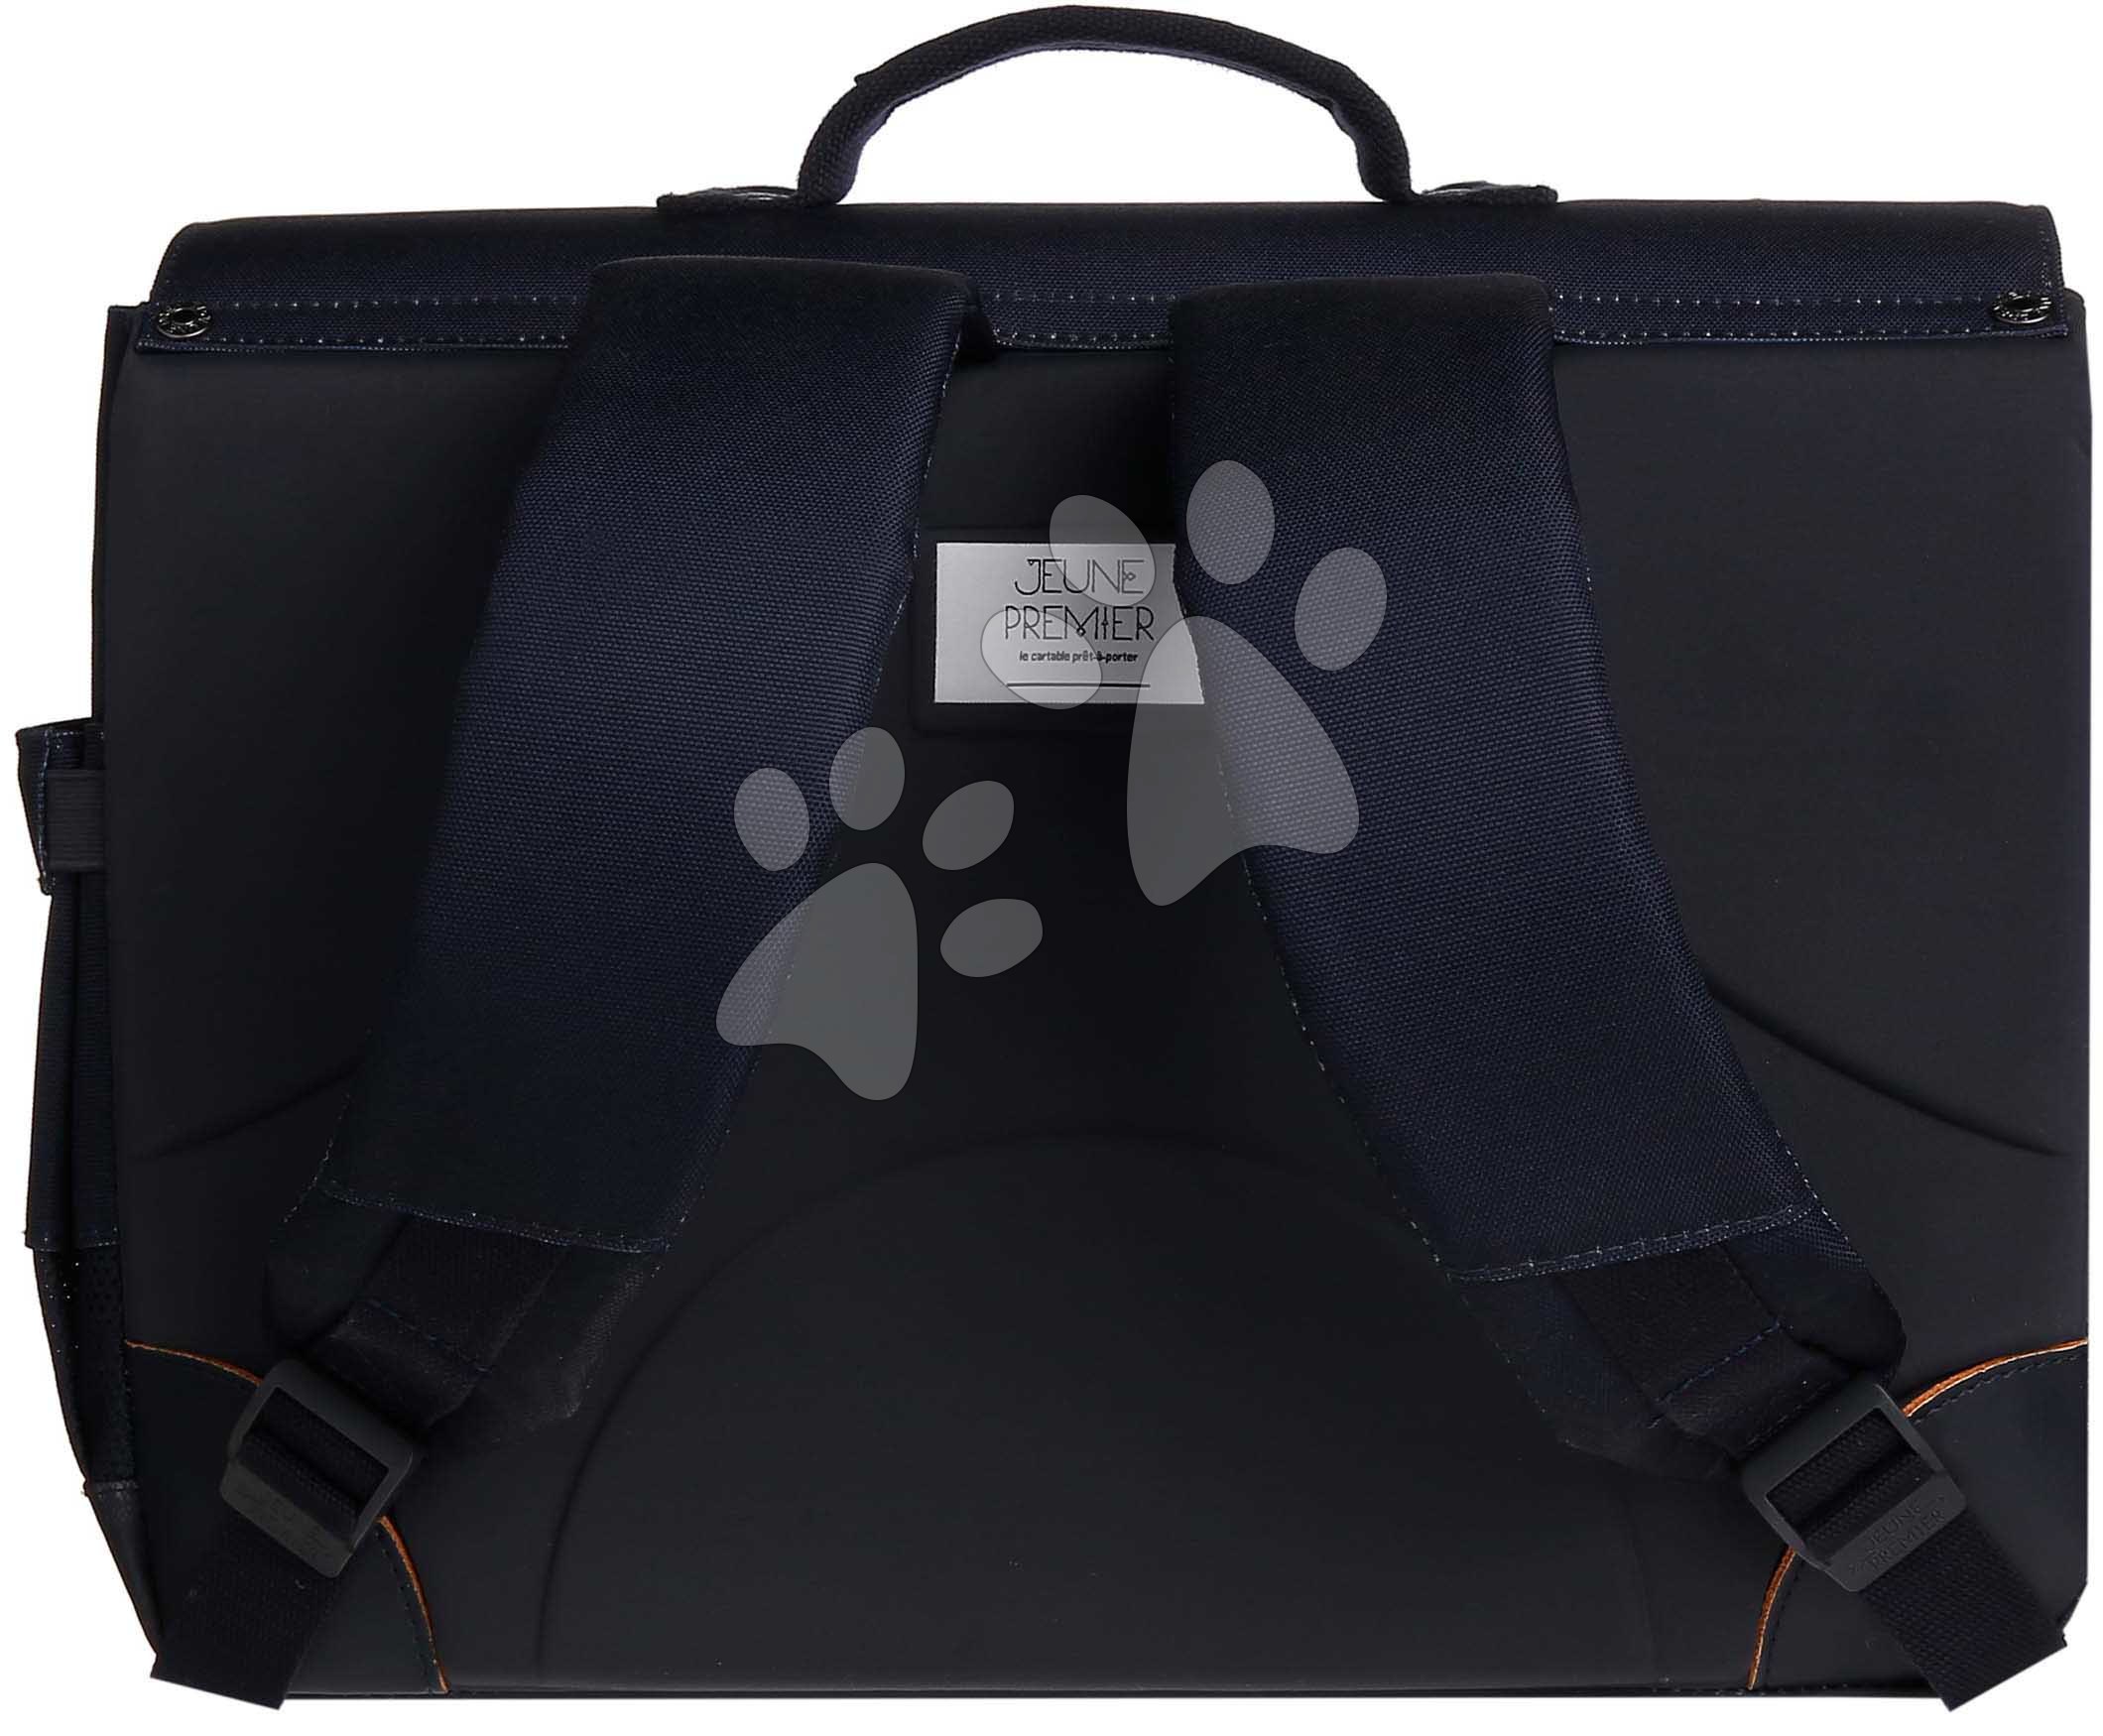 Iskolai aktatáska It Bag Midi Mr. Gadget Jeune Premier ergonomikus luxus kivitel 30*38 cm